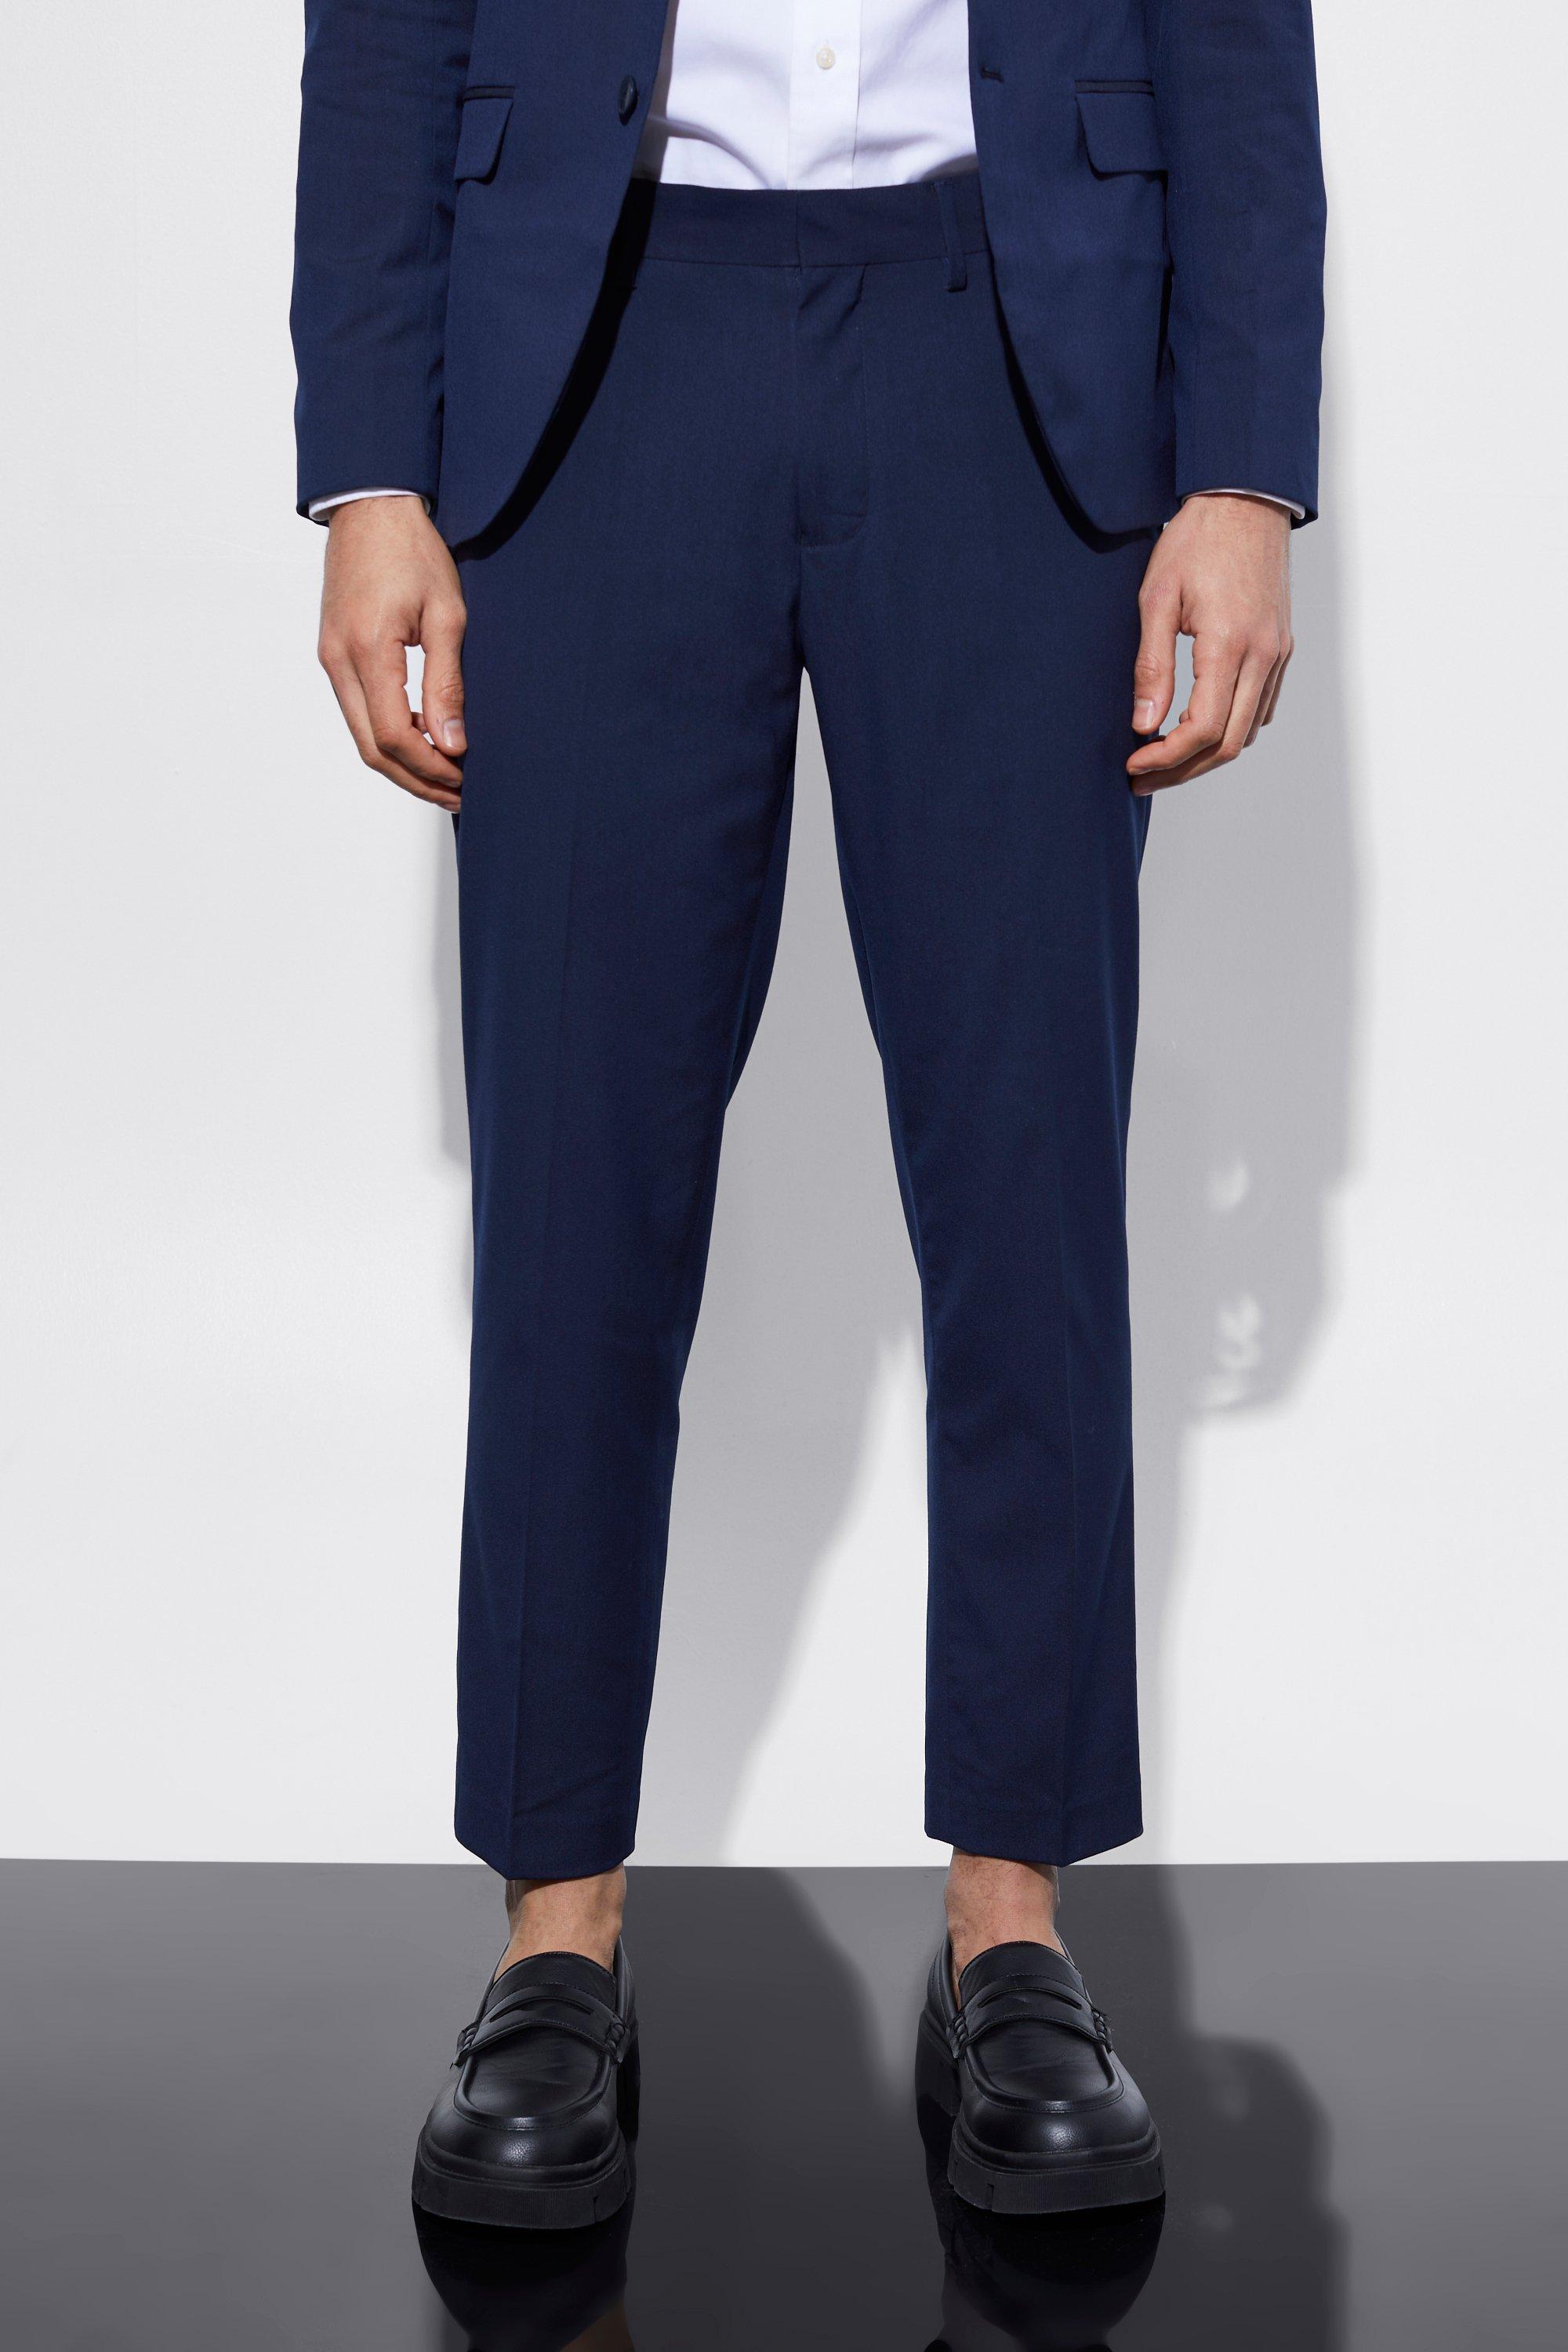 pantalon de costume slim homme - bleu - 30r, bleu